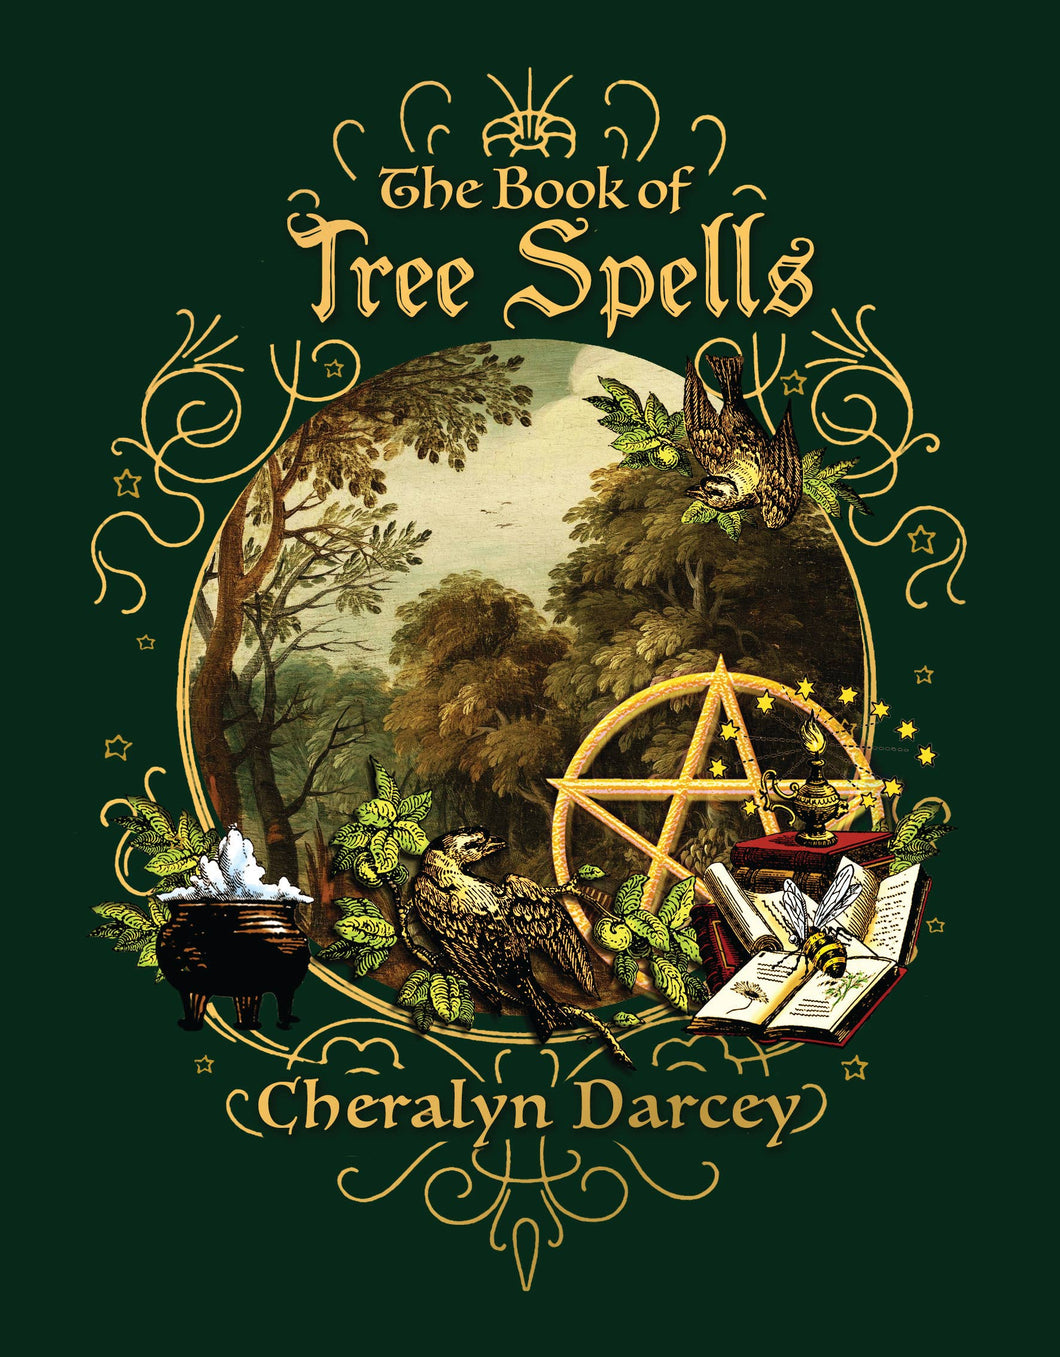 Red Wheel/Weiser LLC - The Book of Tree Spells